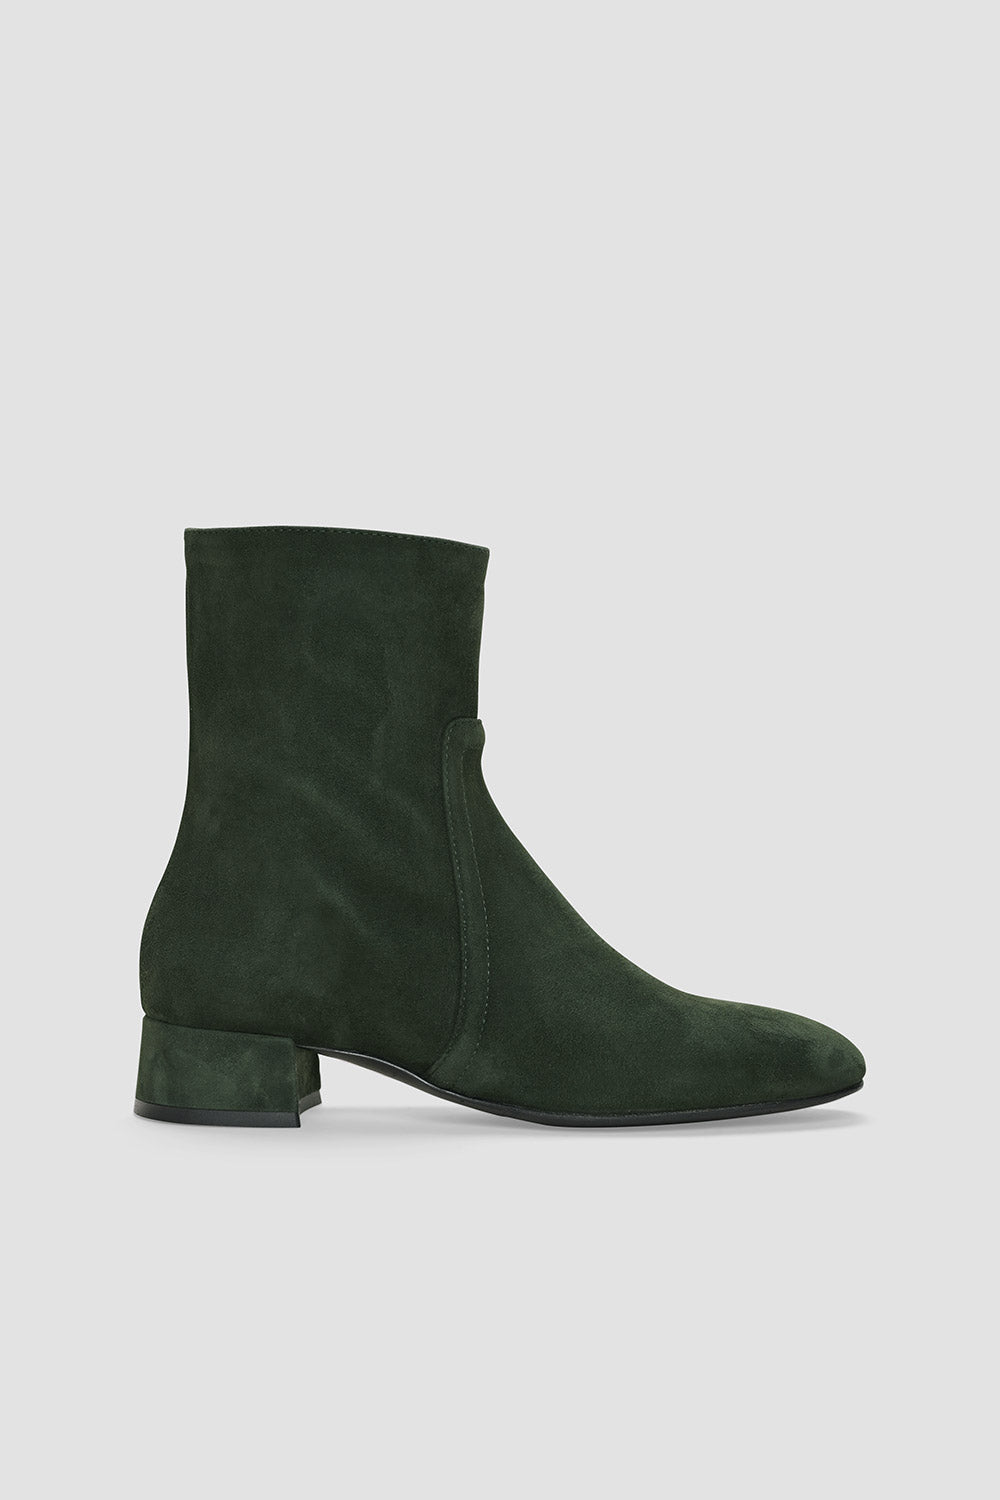 Ida Cam Boots - verde